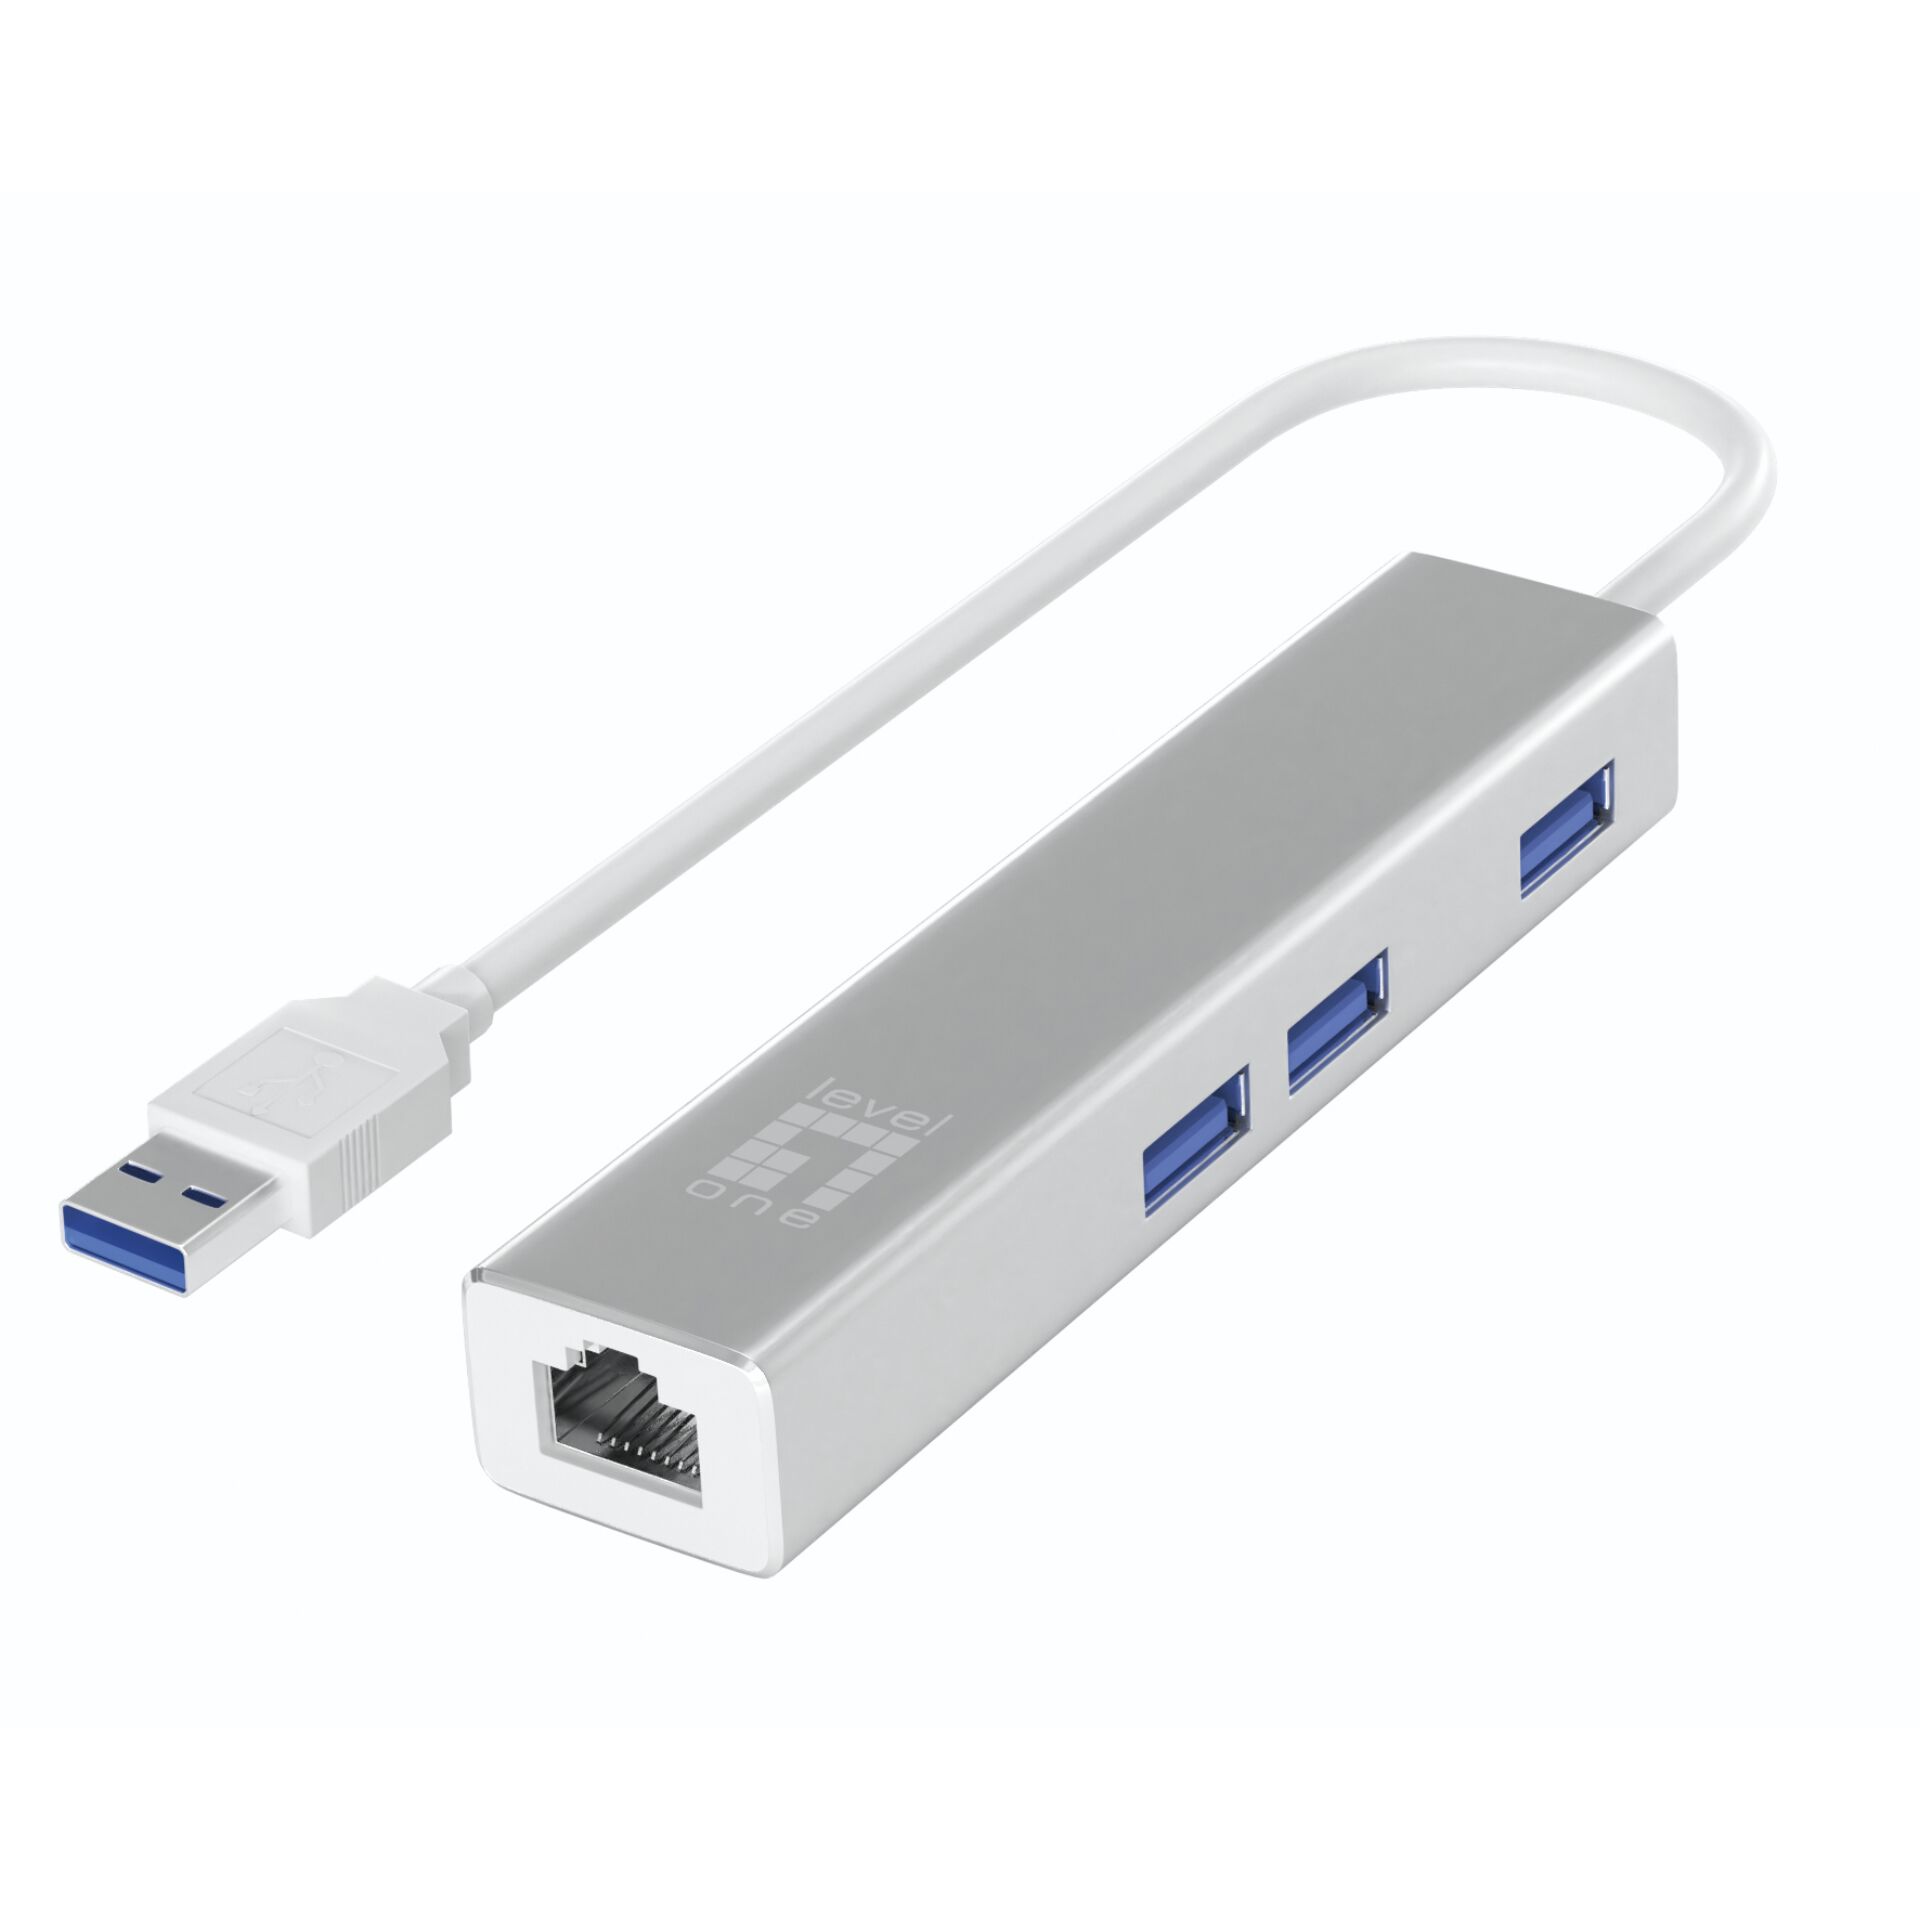 LevelOne USB-0503 Gigabit USB Netzwerkadapter mit USB Hub 